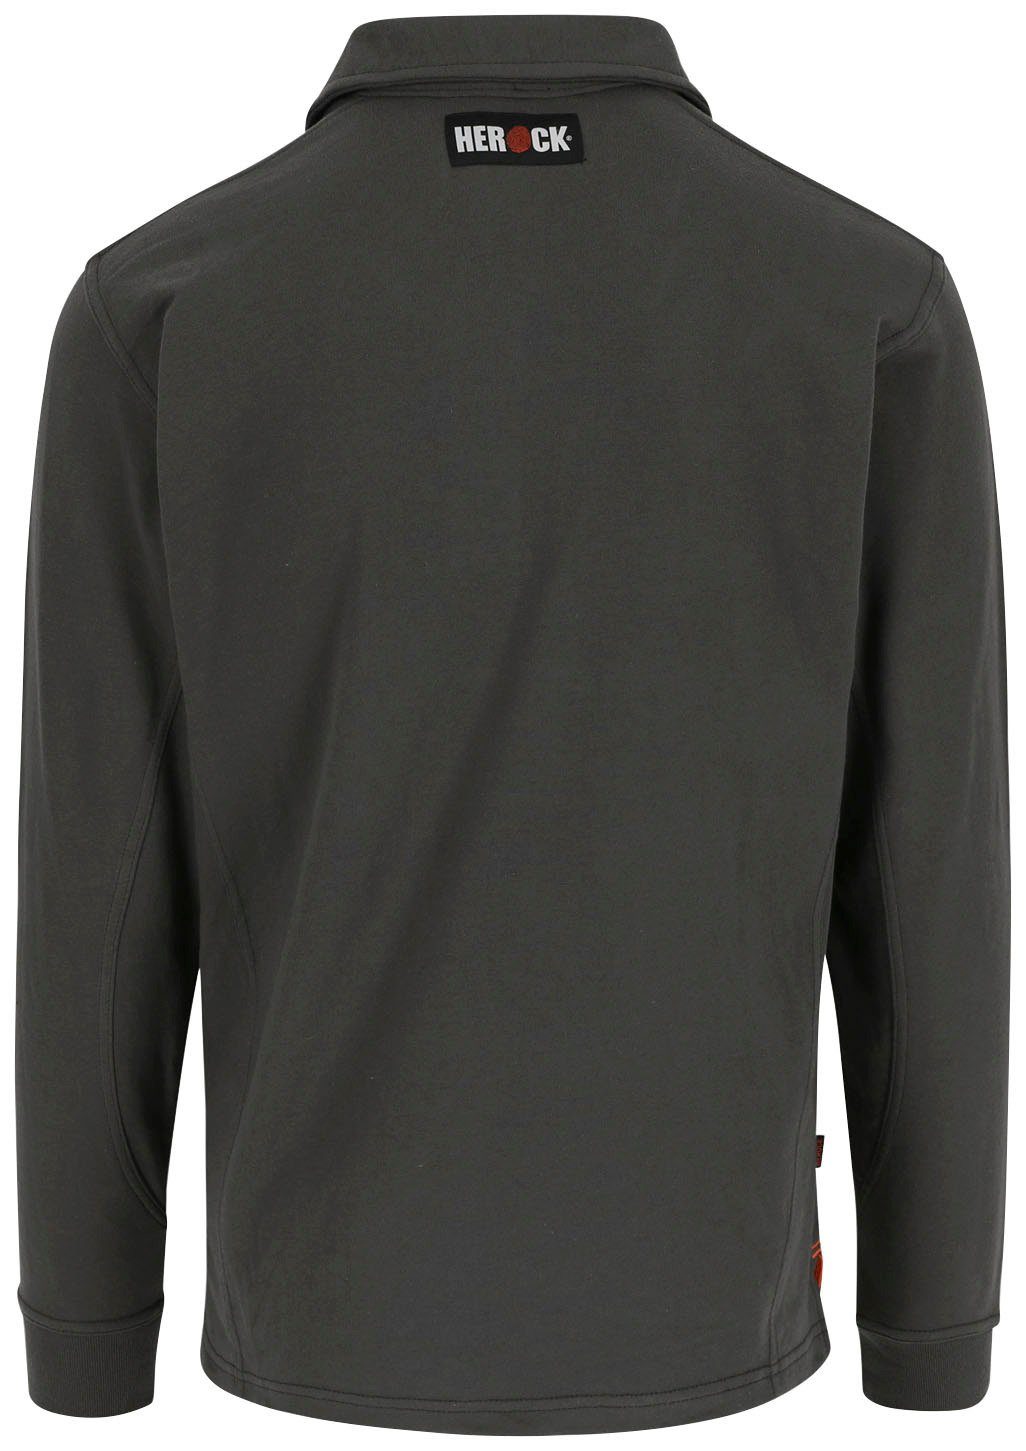 Langarm-Poloshirt leicht figurformend, Tragegefühl, grau verschiedene Angenehmes Langärmlig Farben Herock Troja Polo